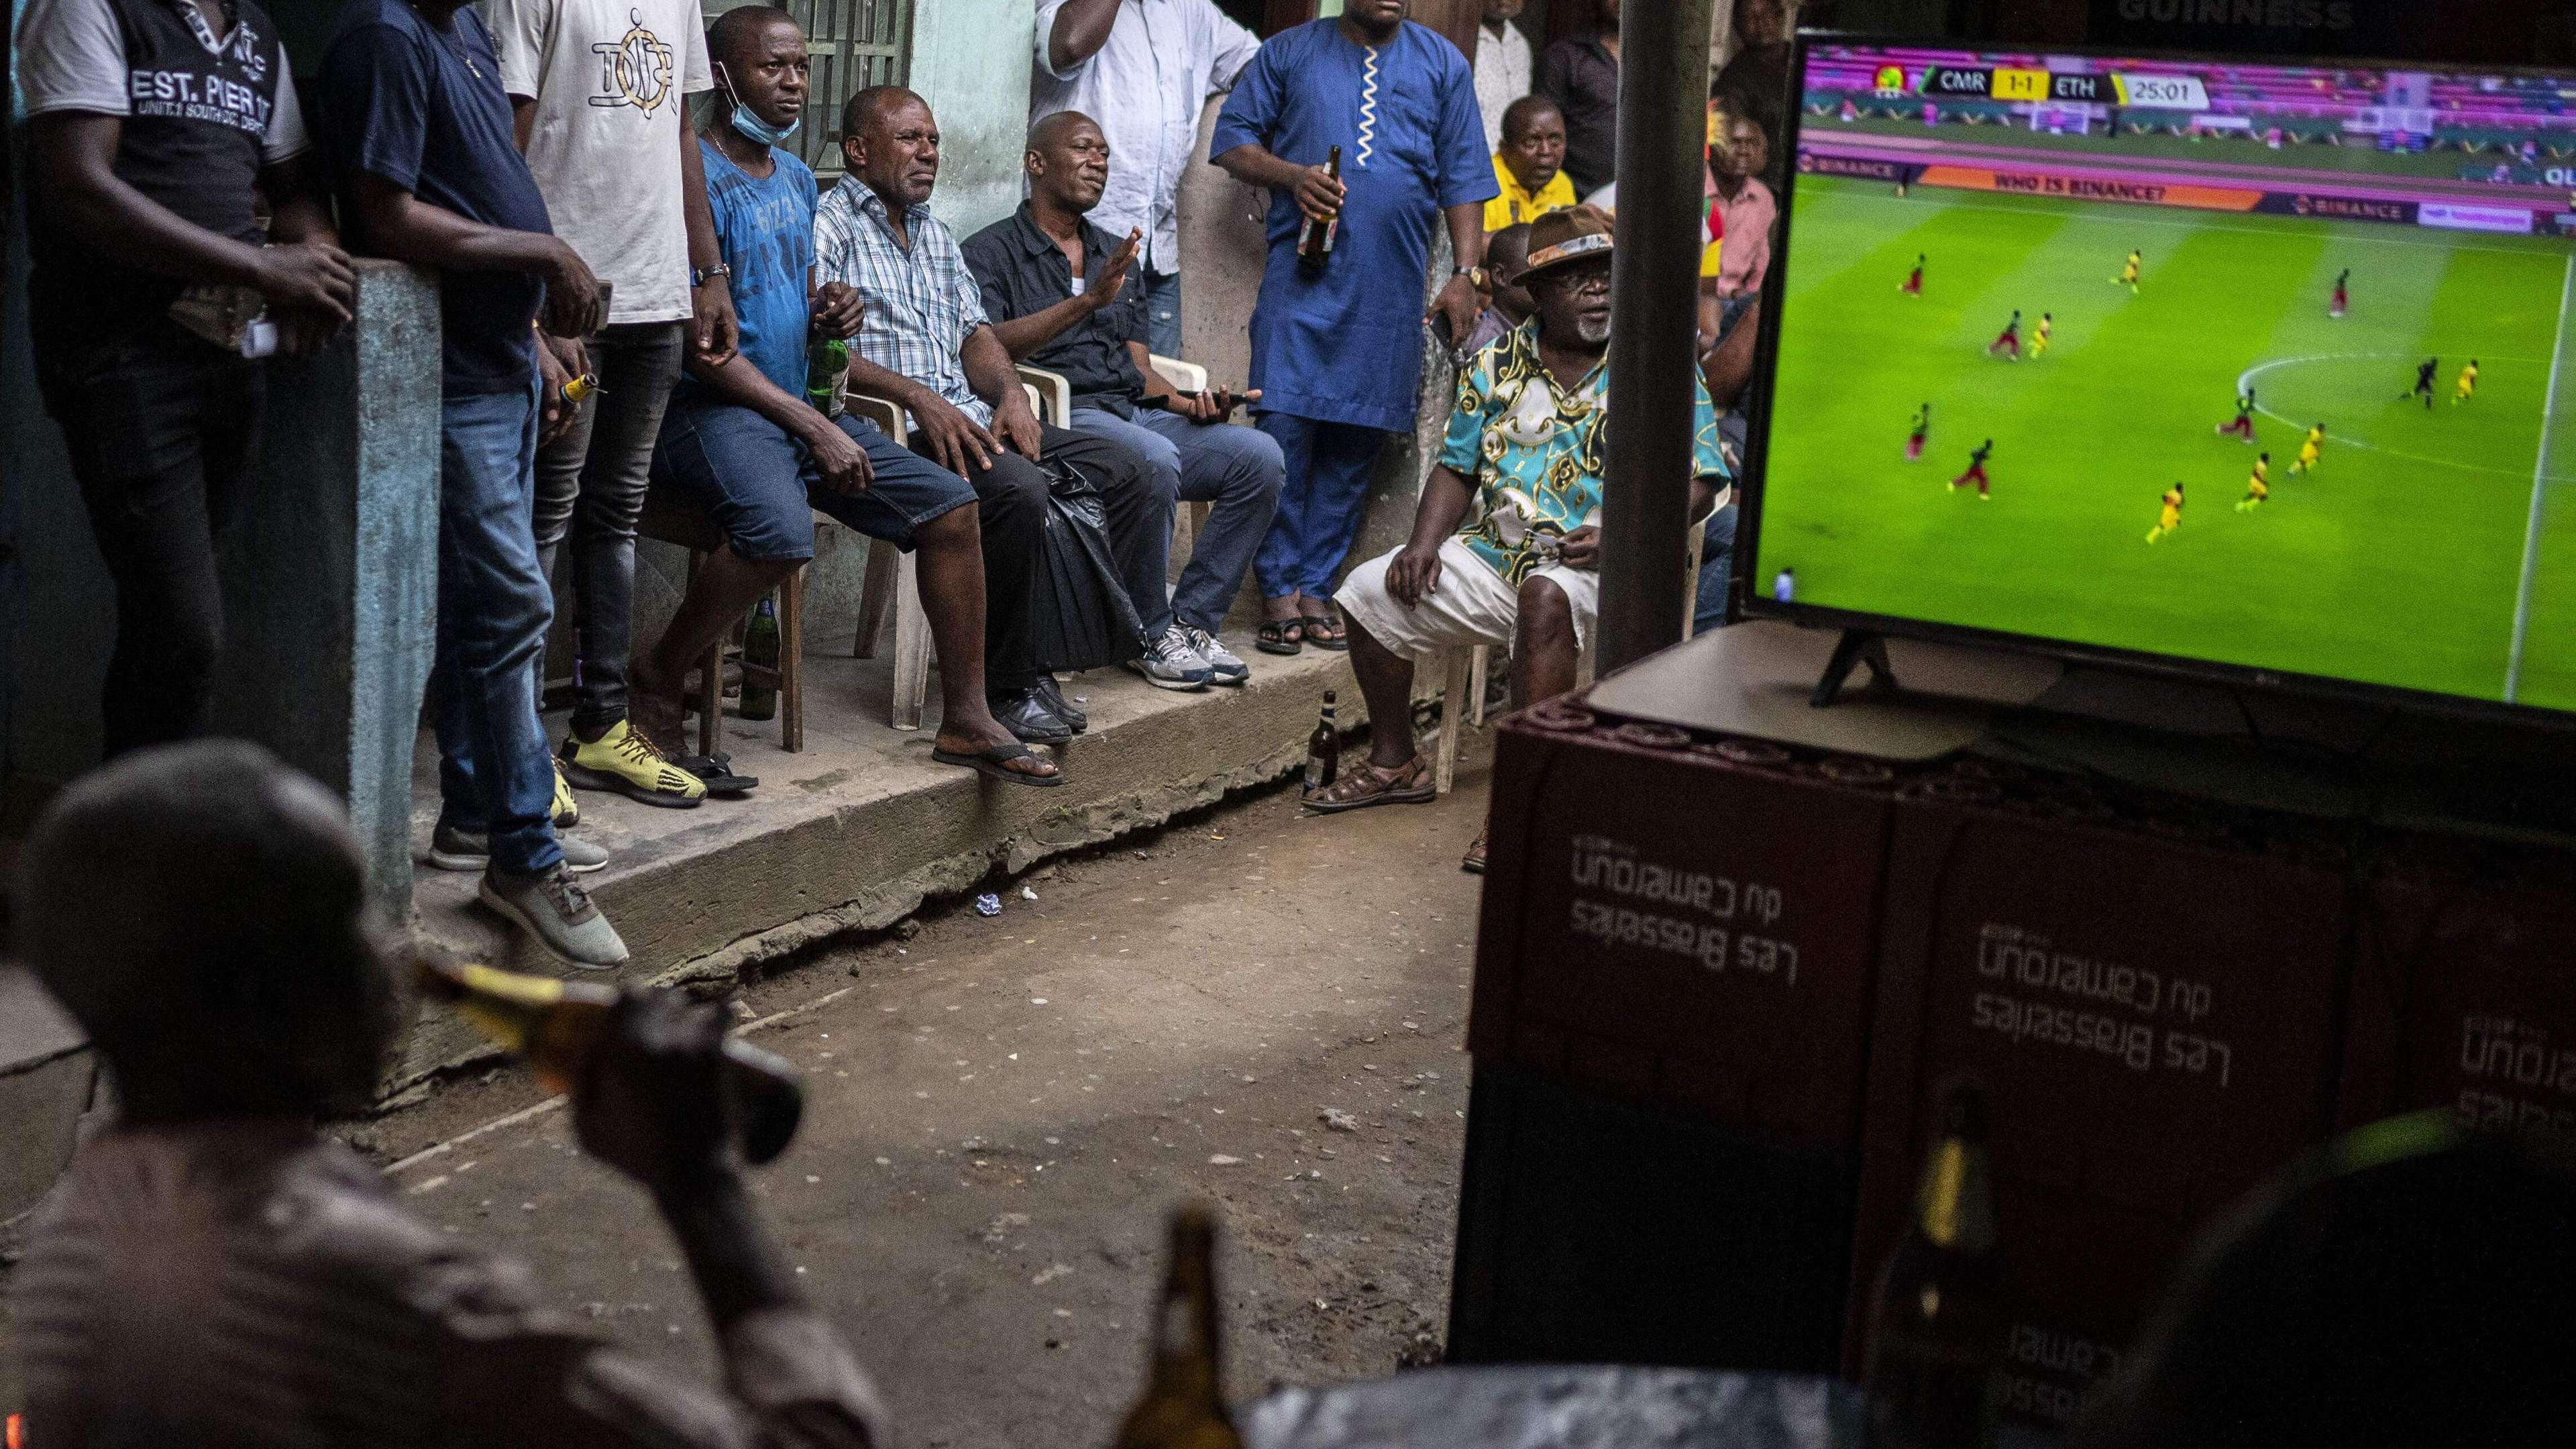 A football fan watching football on TV